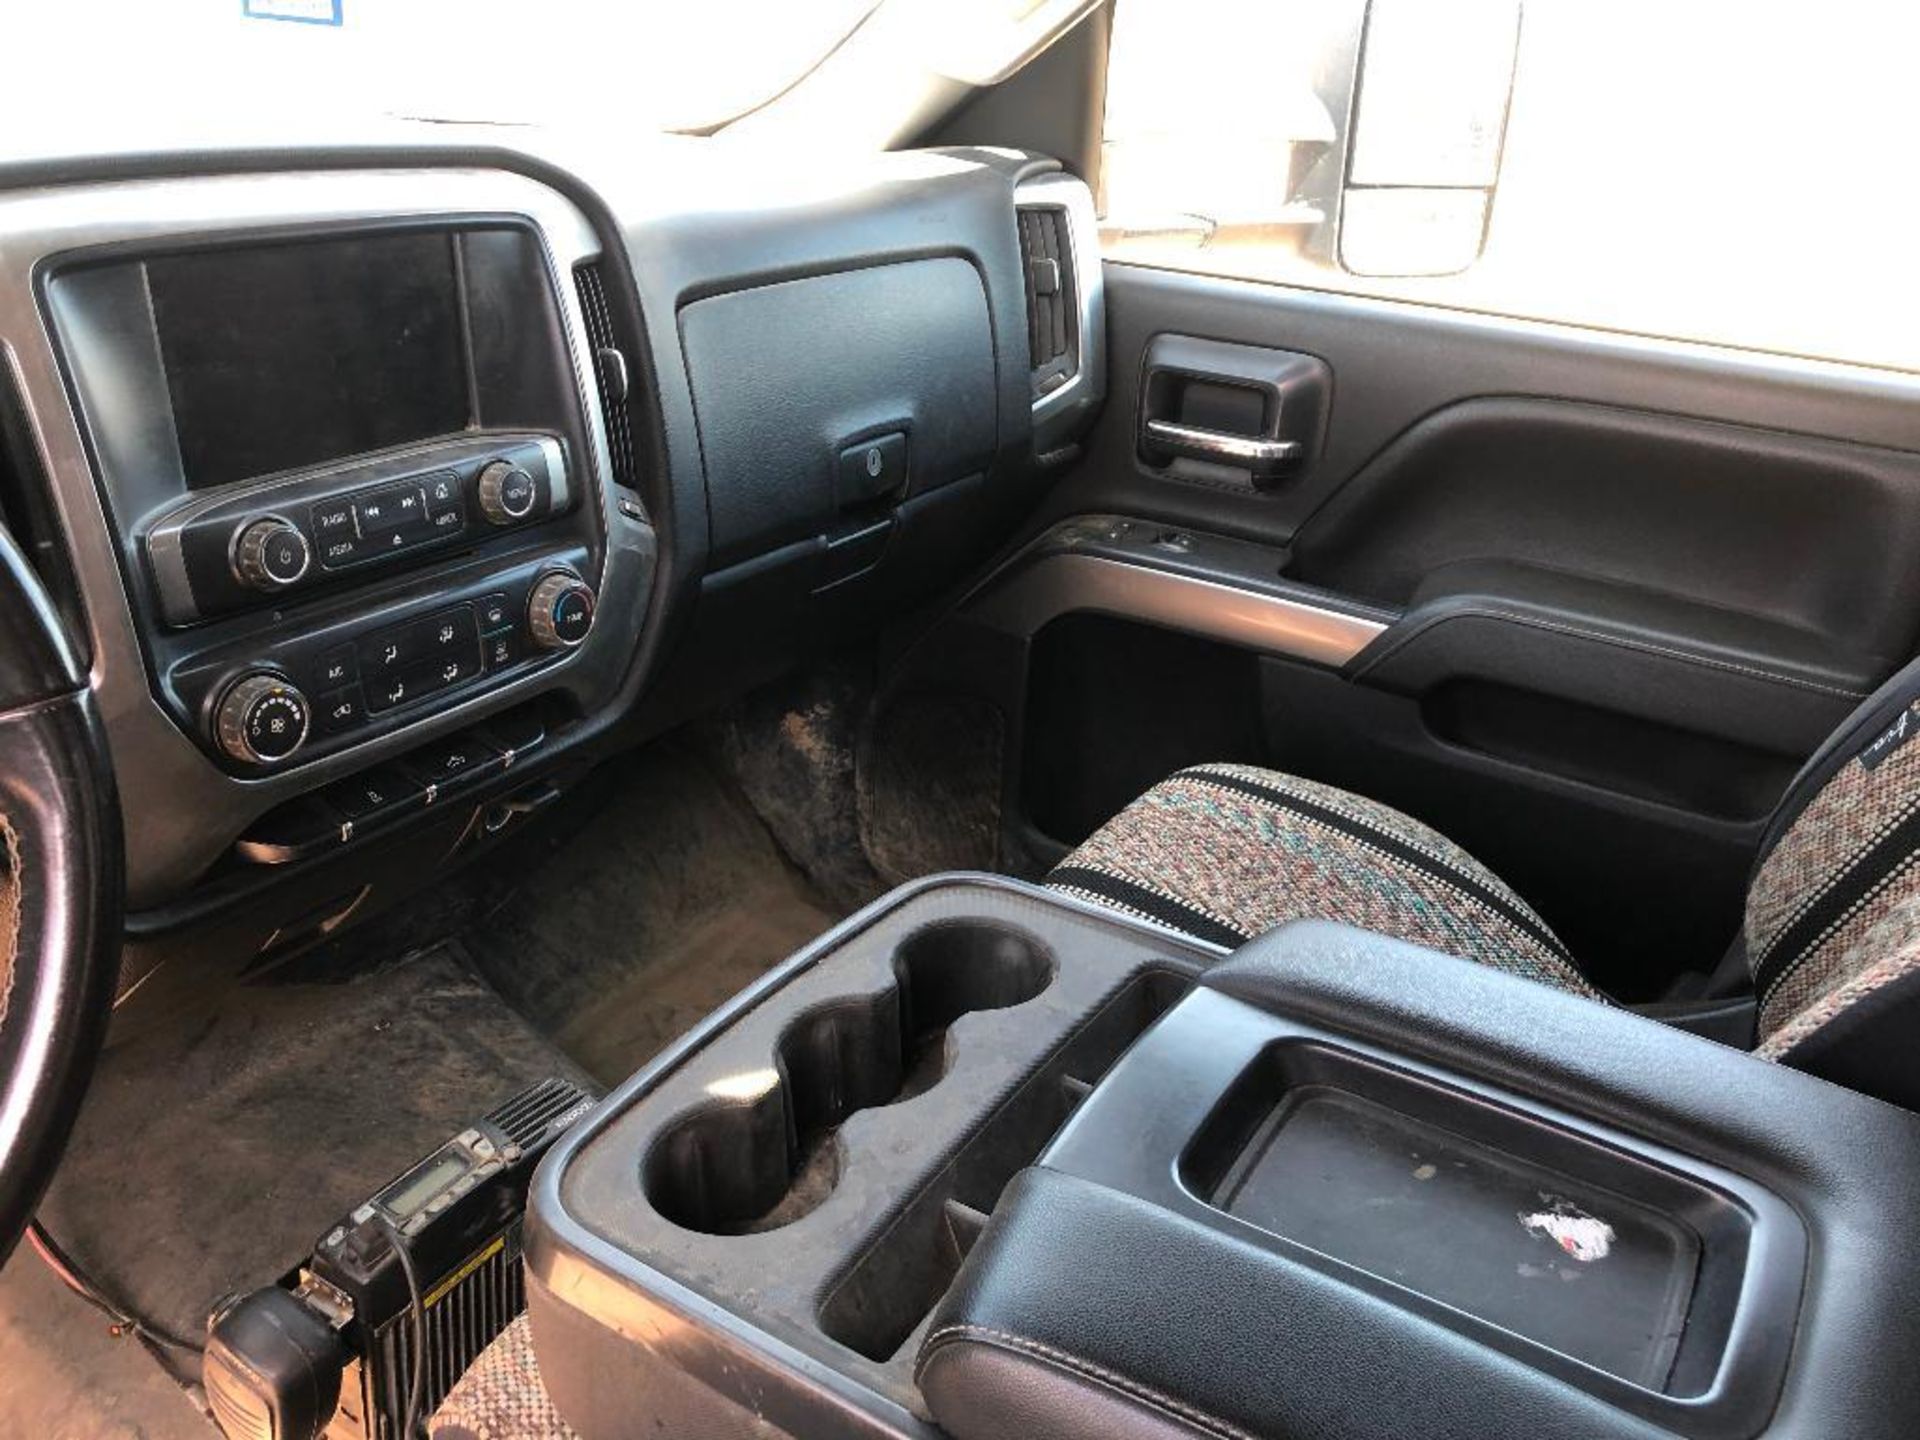 2015 Chevrolet Silverado Crew Cab 4X4 DRW Deck Truck w/ Fuel System VIN # 1GB4KZCGXFF108029 - Image 13 of 16